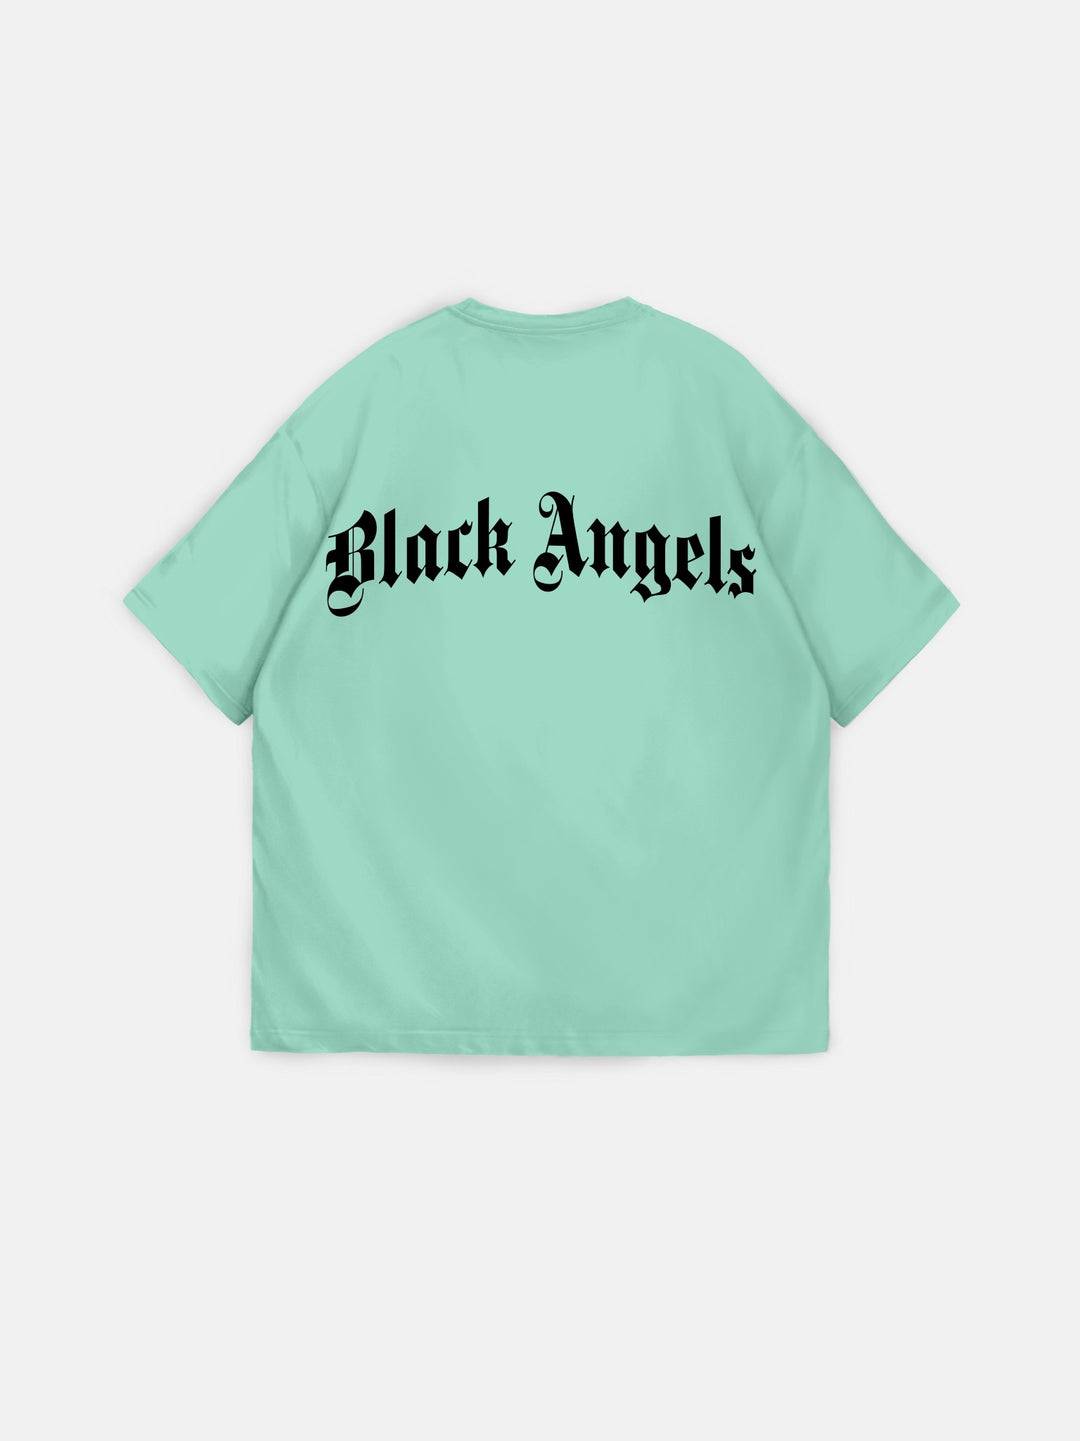 Oversize Black Angels T-Shirt - Mint